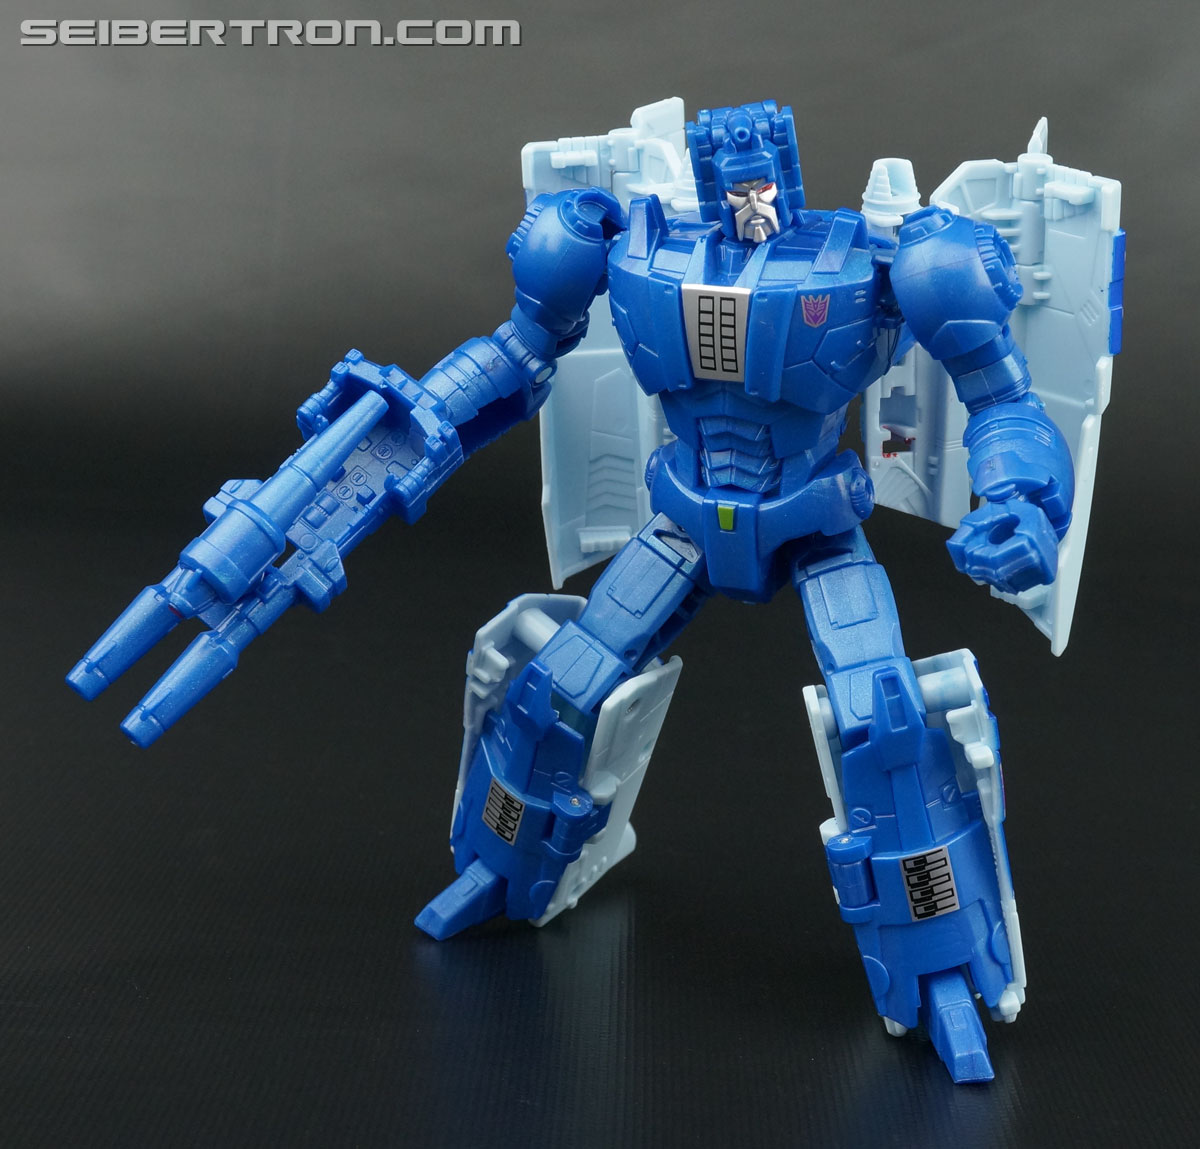 Transformers Titans Return Head Interchangeability Featuring Titan